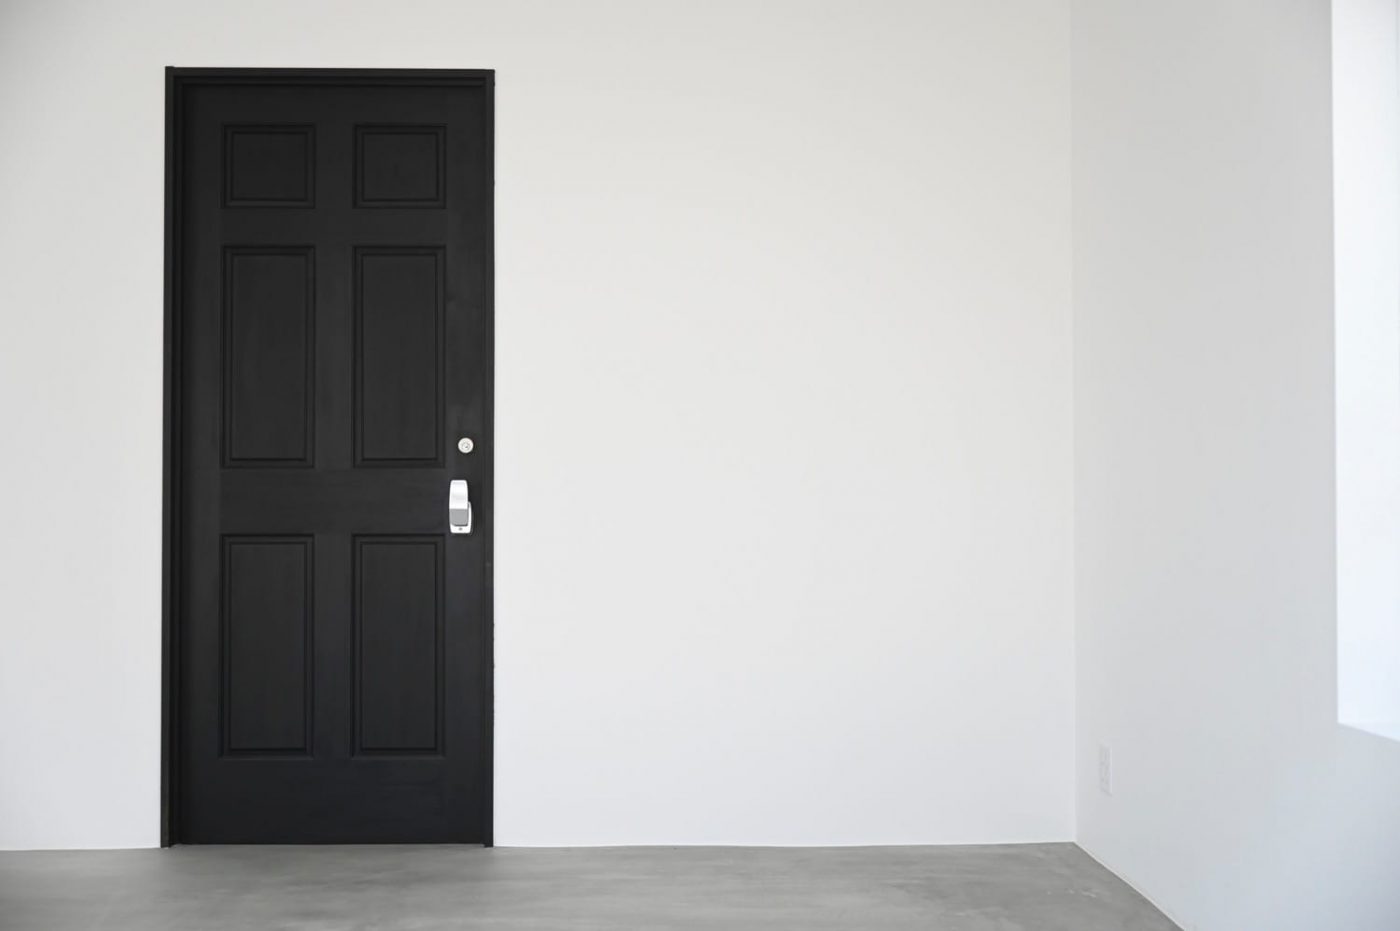 <p>業務用らしいサイズ感と形状は、ドアにインダストリアルな雰囲気をもたらします。（写真提供：photo studio mo’ better）</p>
